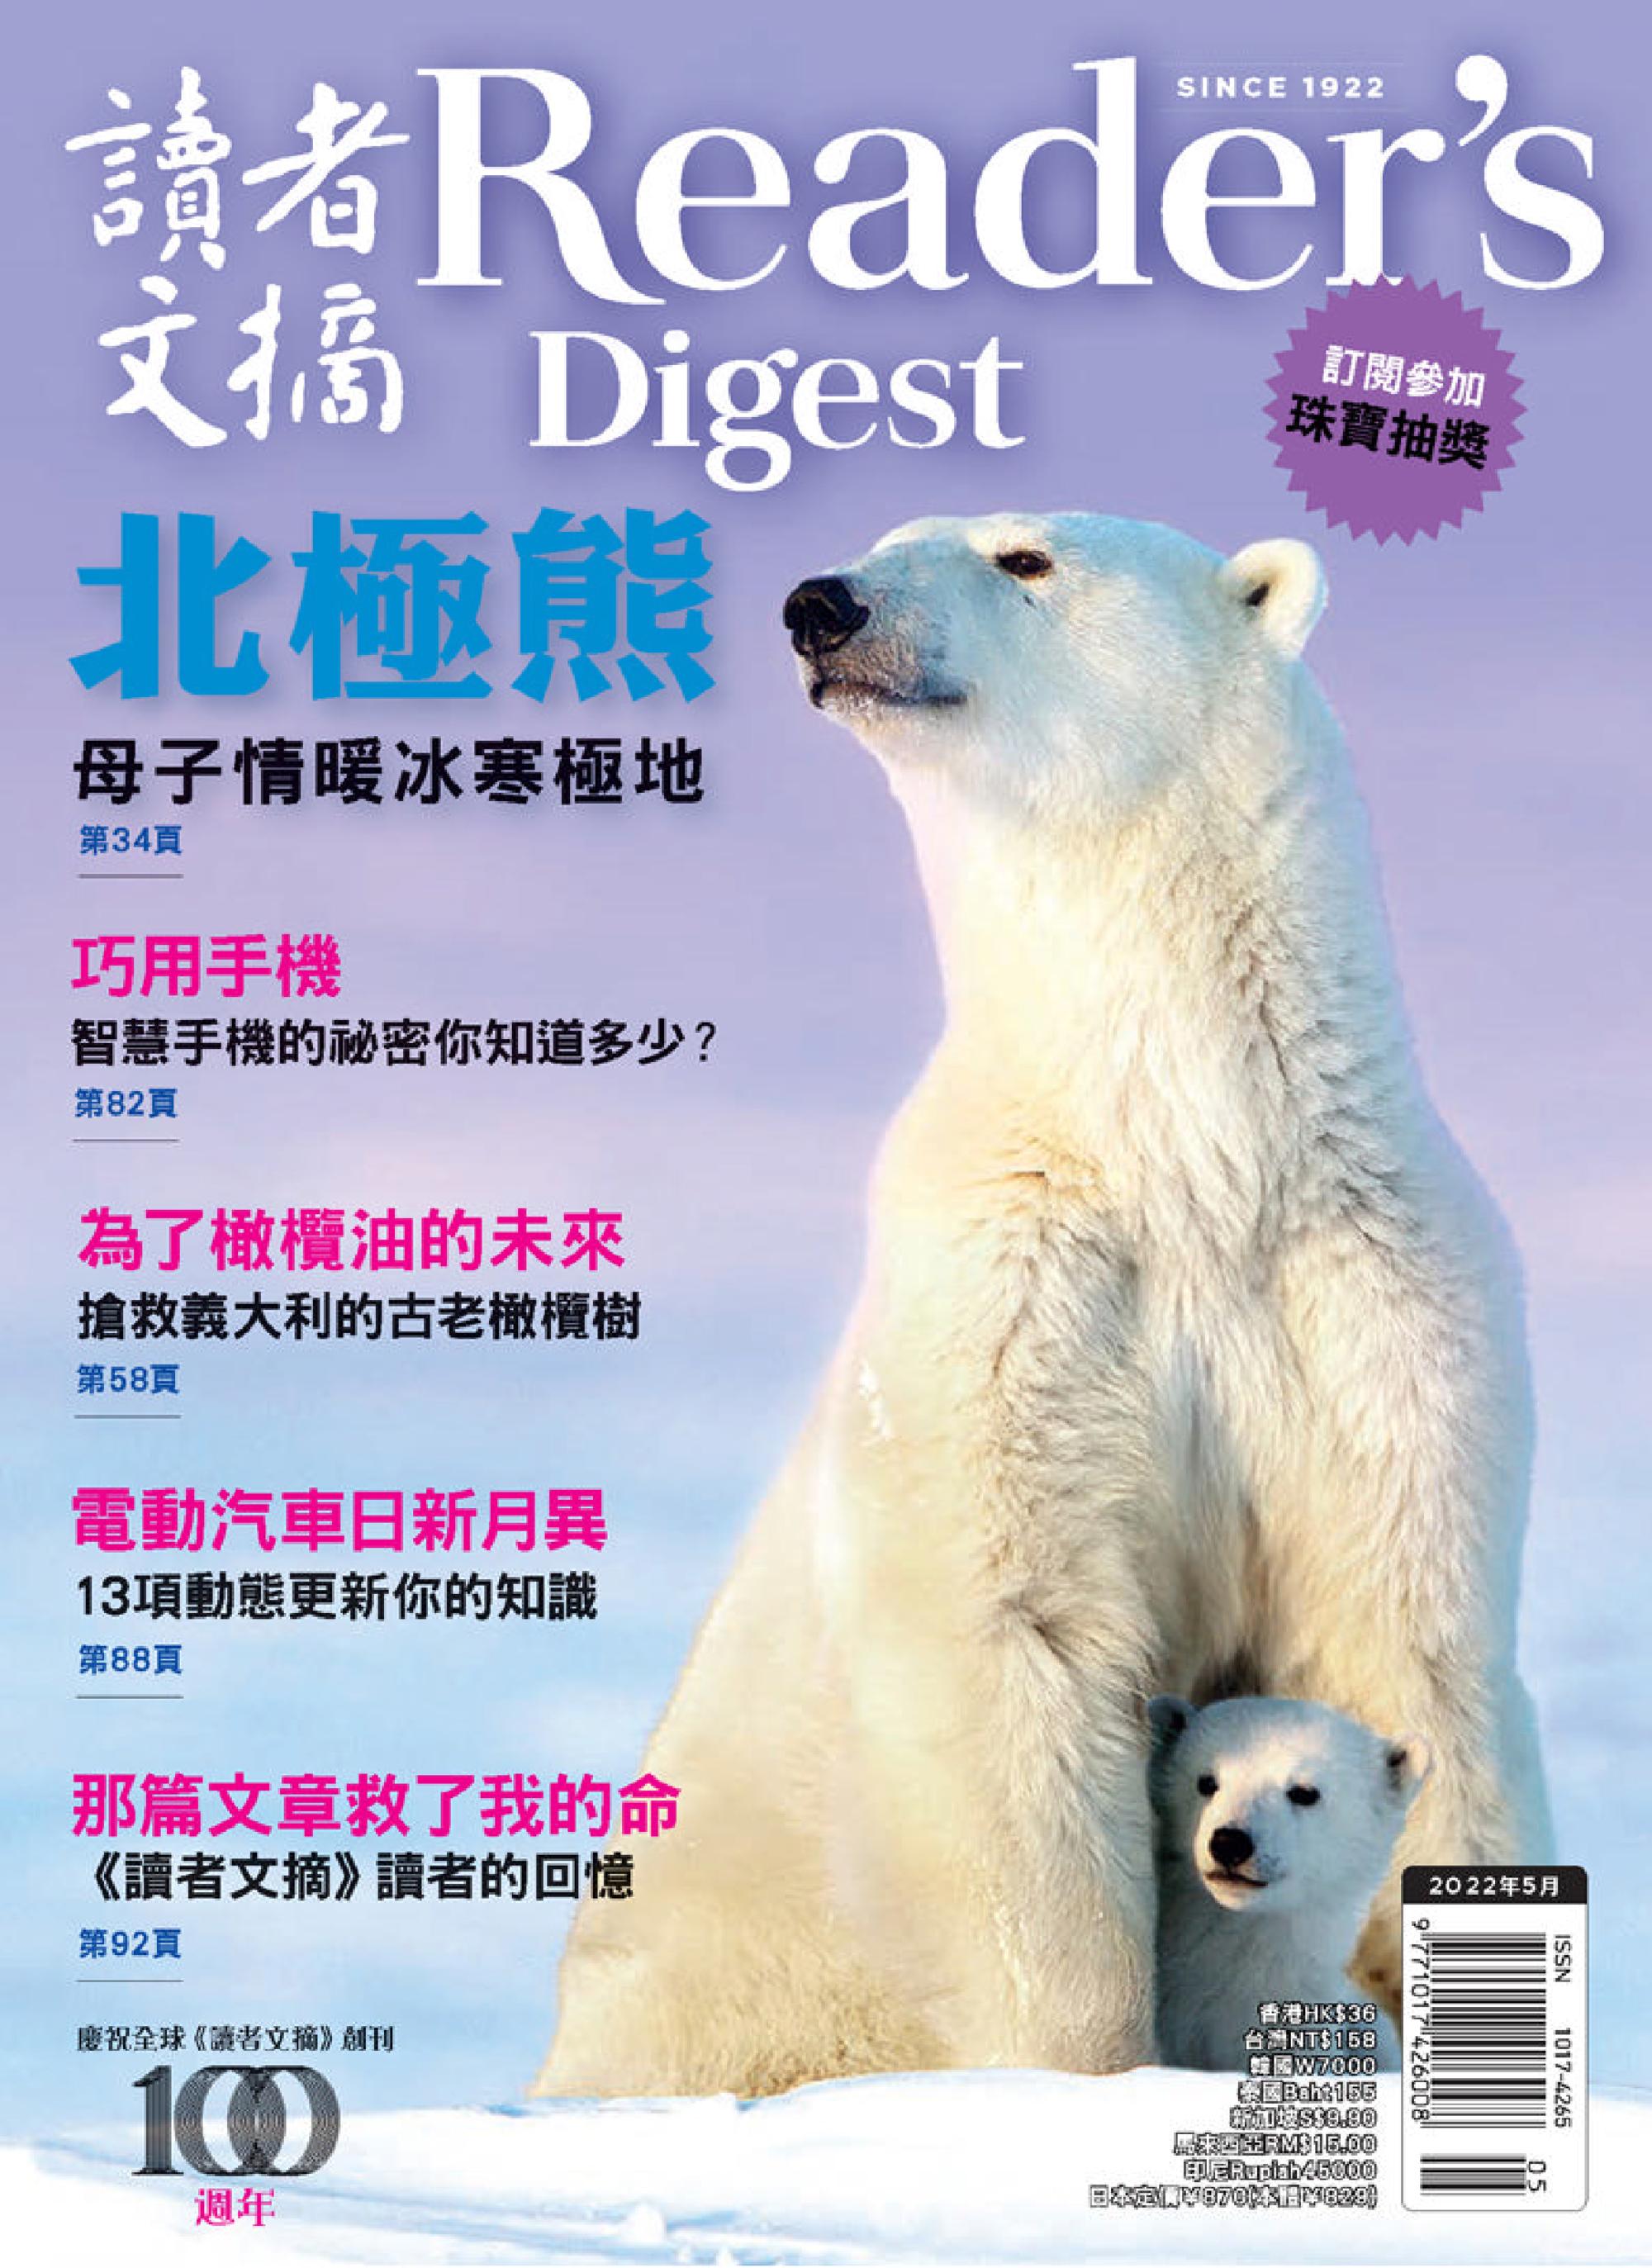 Reader's Digest 讀者文摘中文版 - 五月 2022